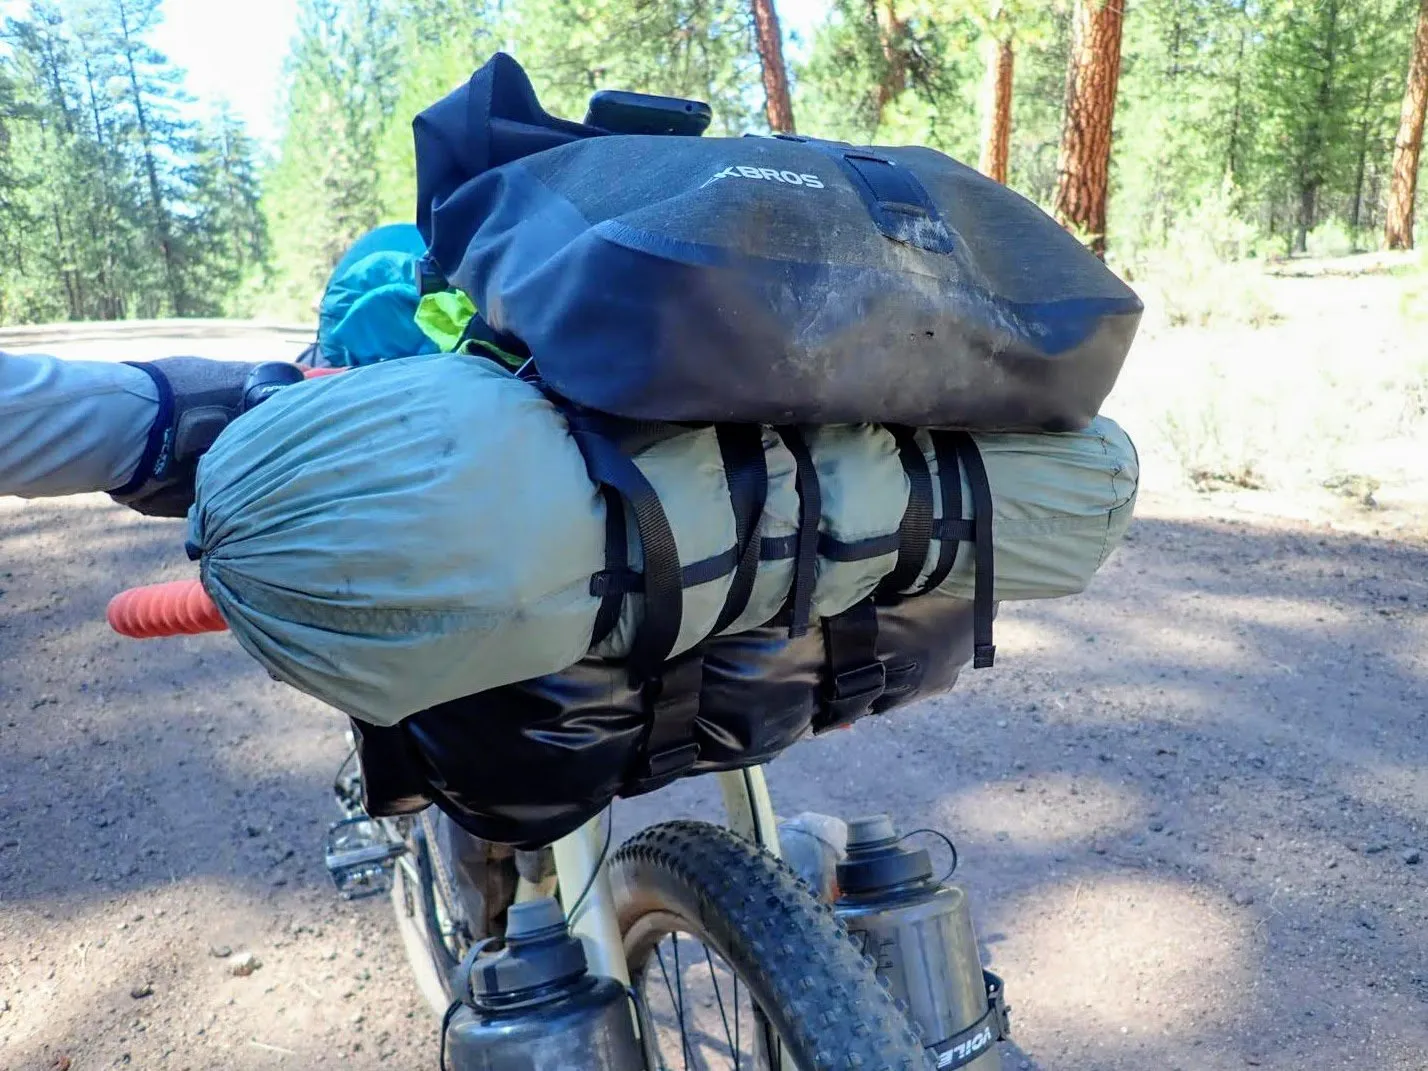 Bike Bags & Racks: How to Choose